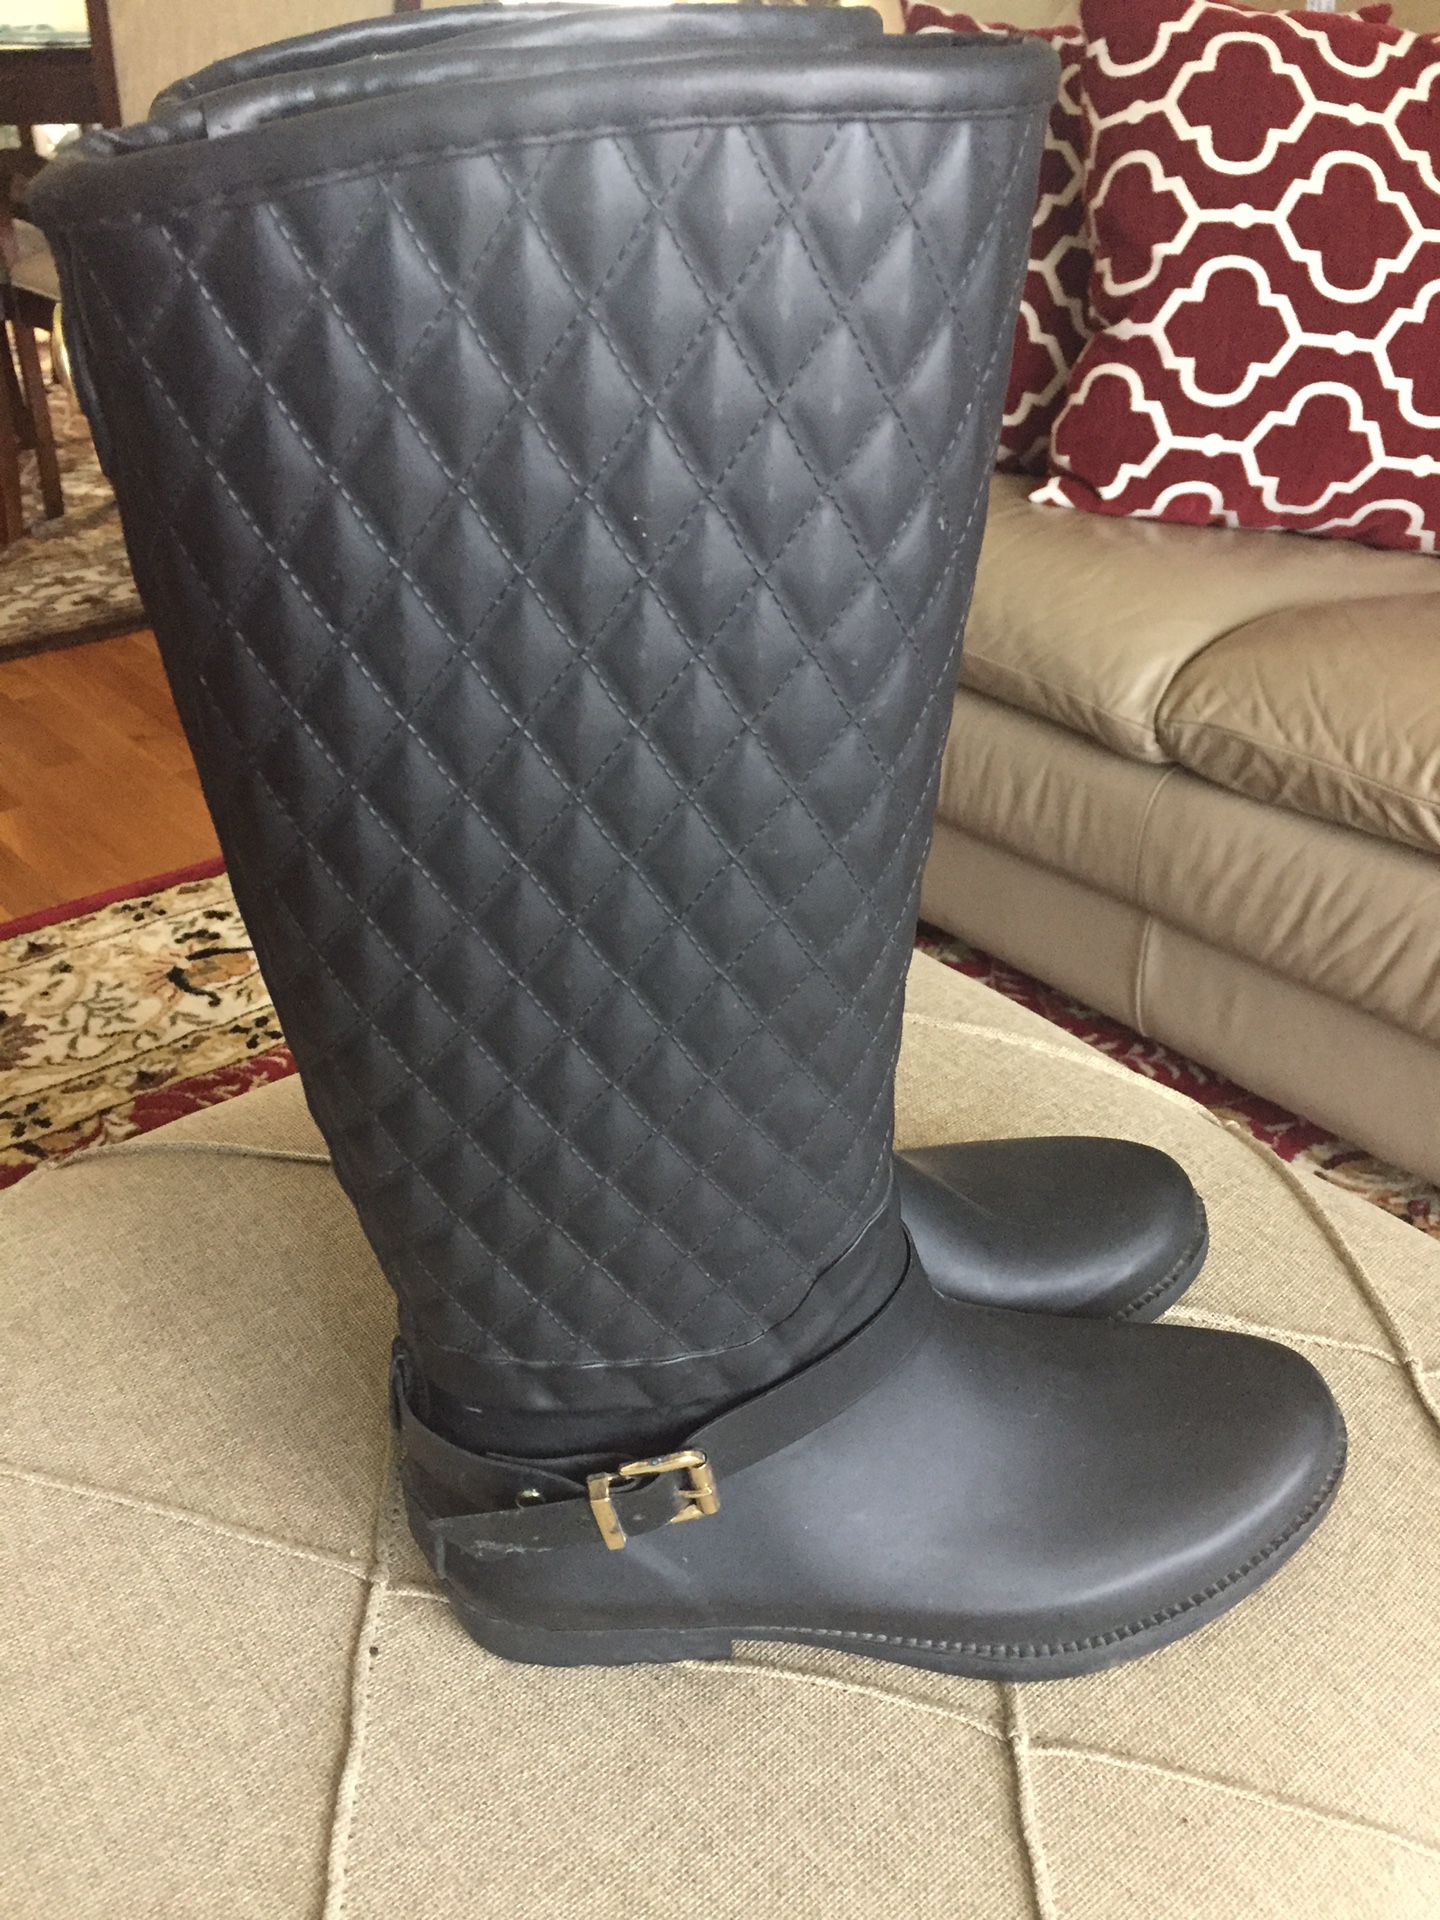 Guess rain boots size 8